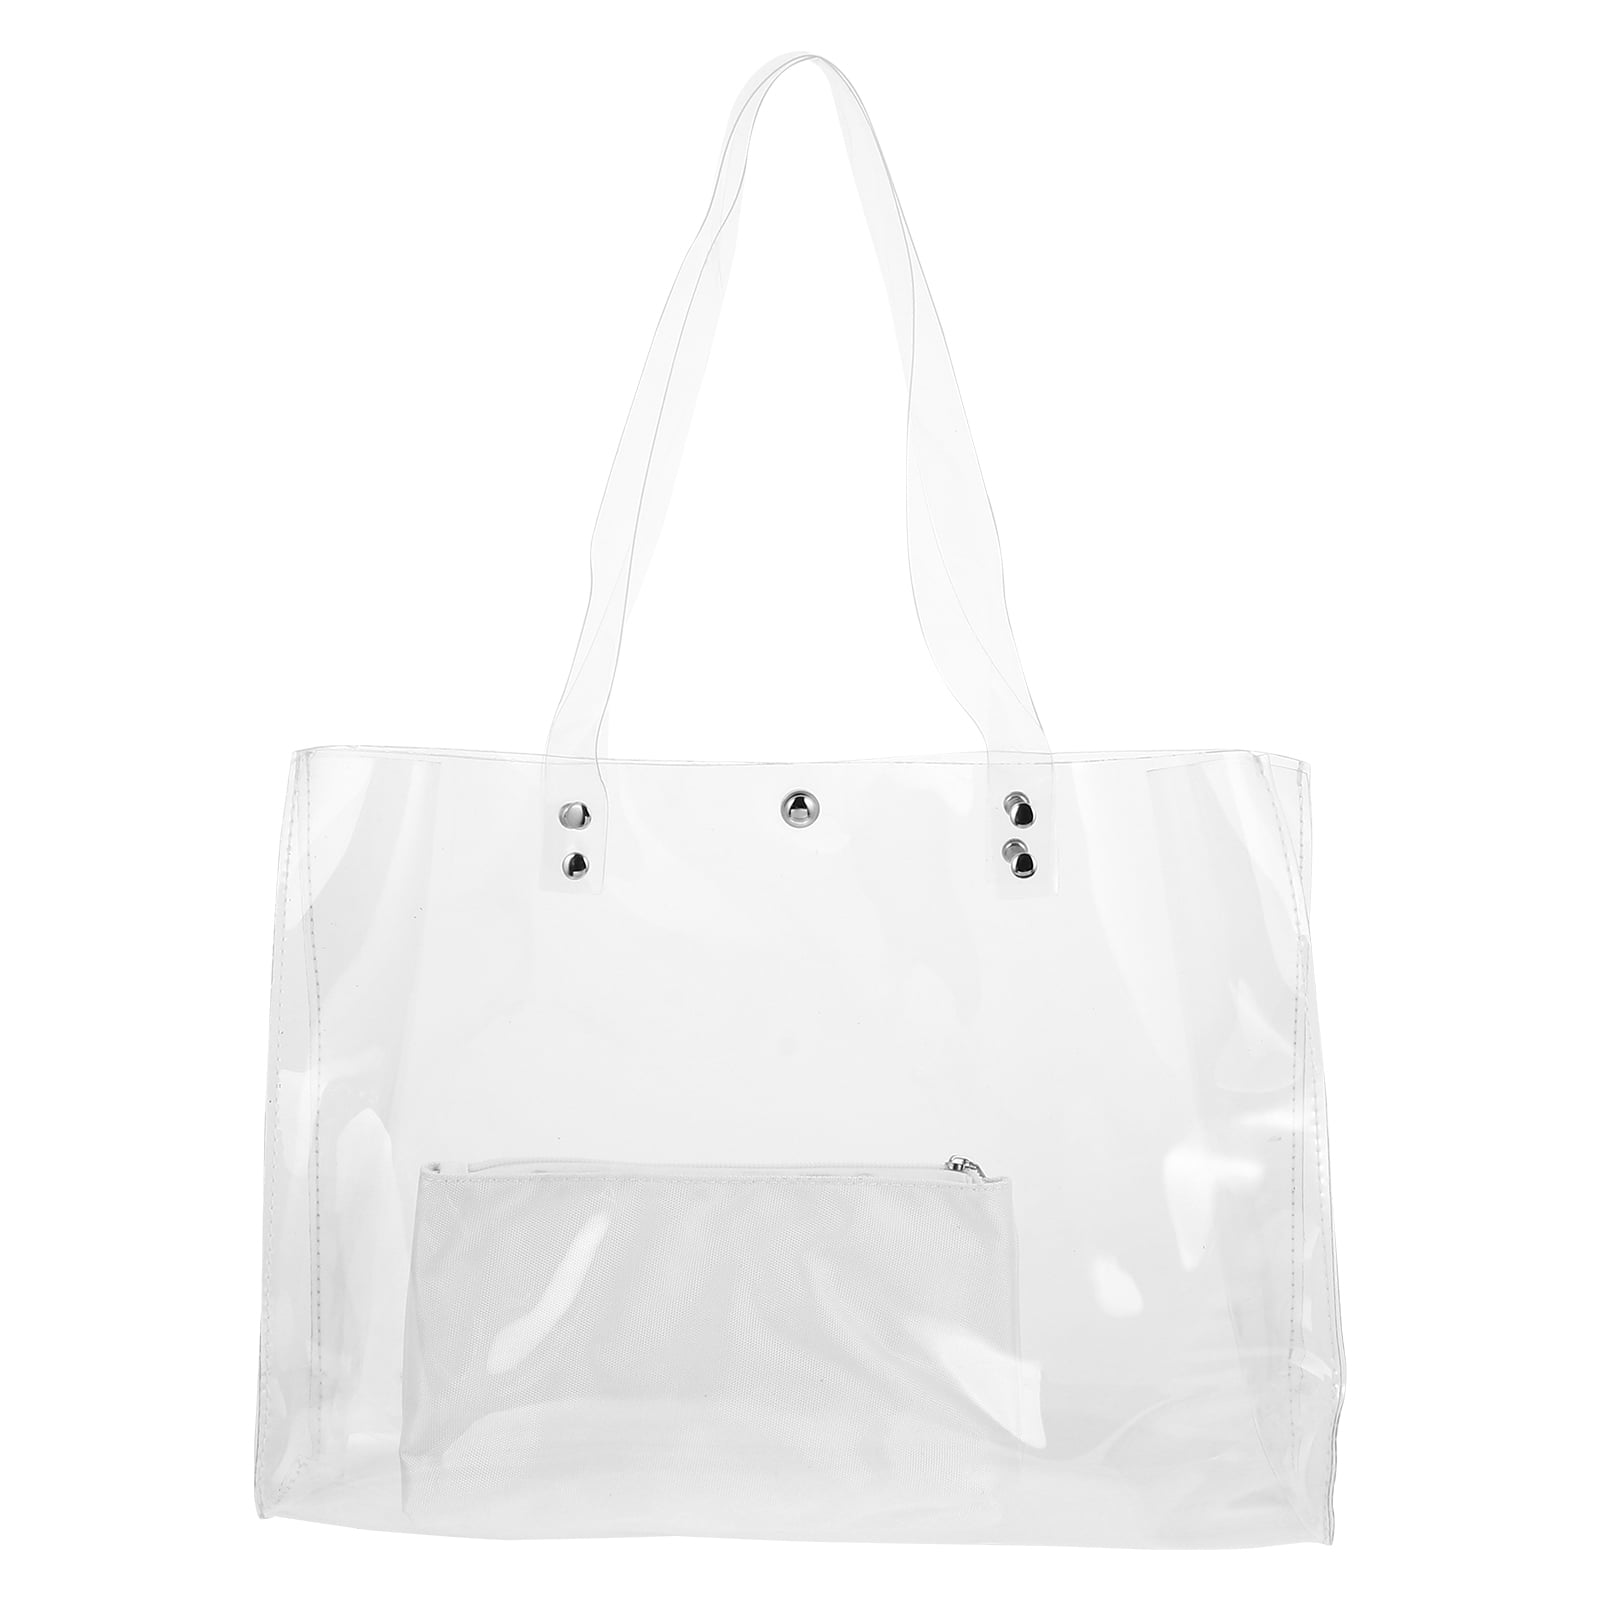 Transparent Tote Bag PVC Beach Bag Shopping Waterproof Women Fashion Handbag 